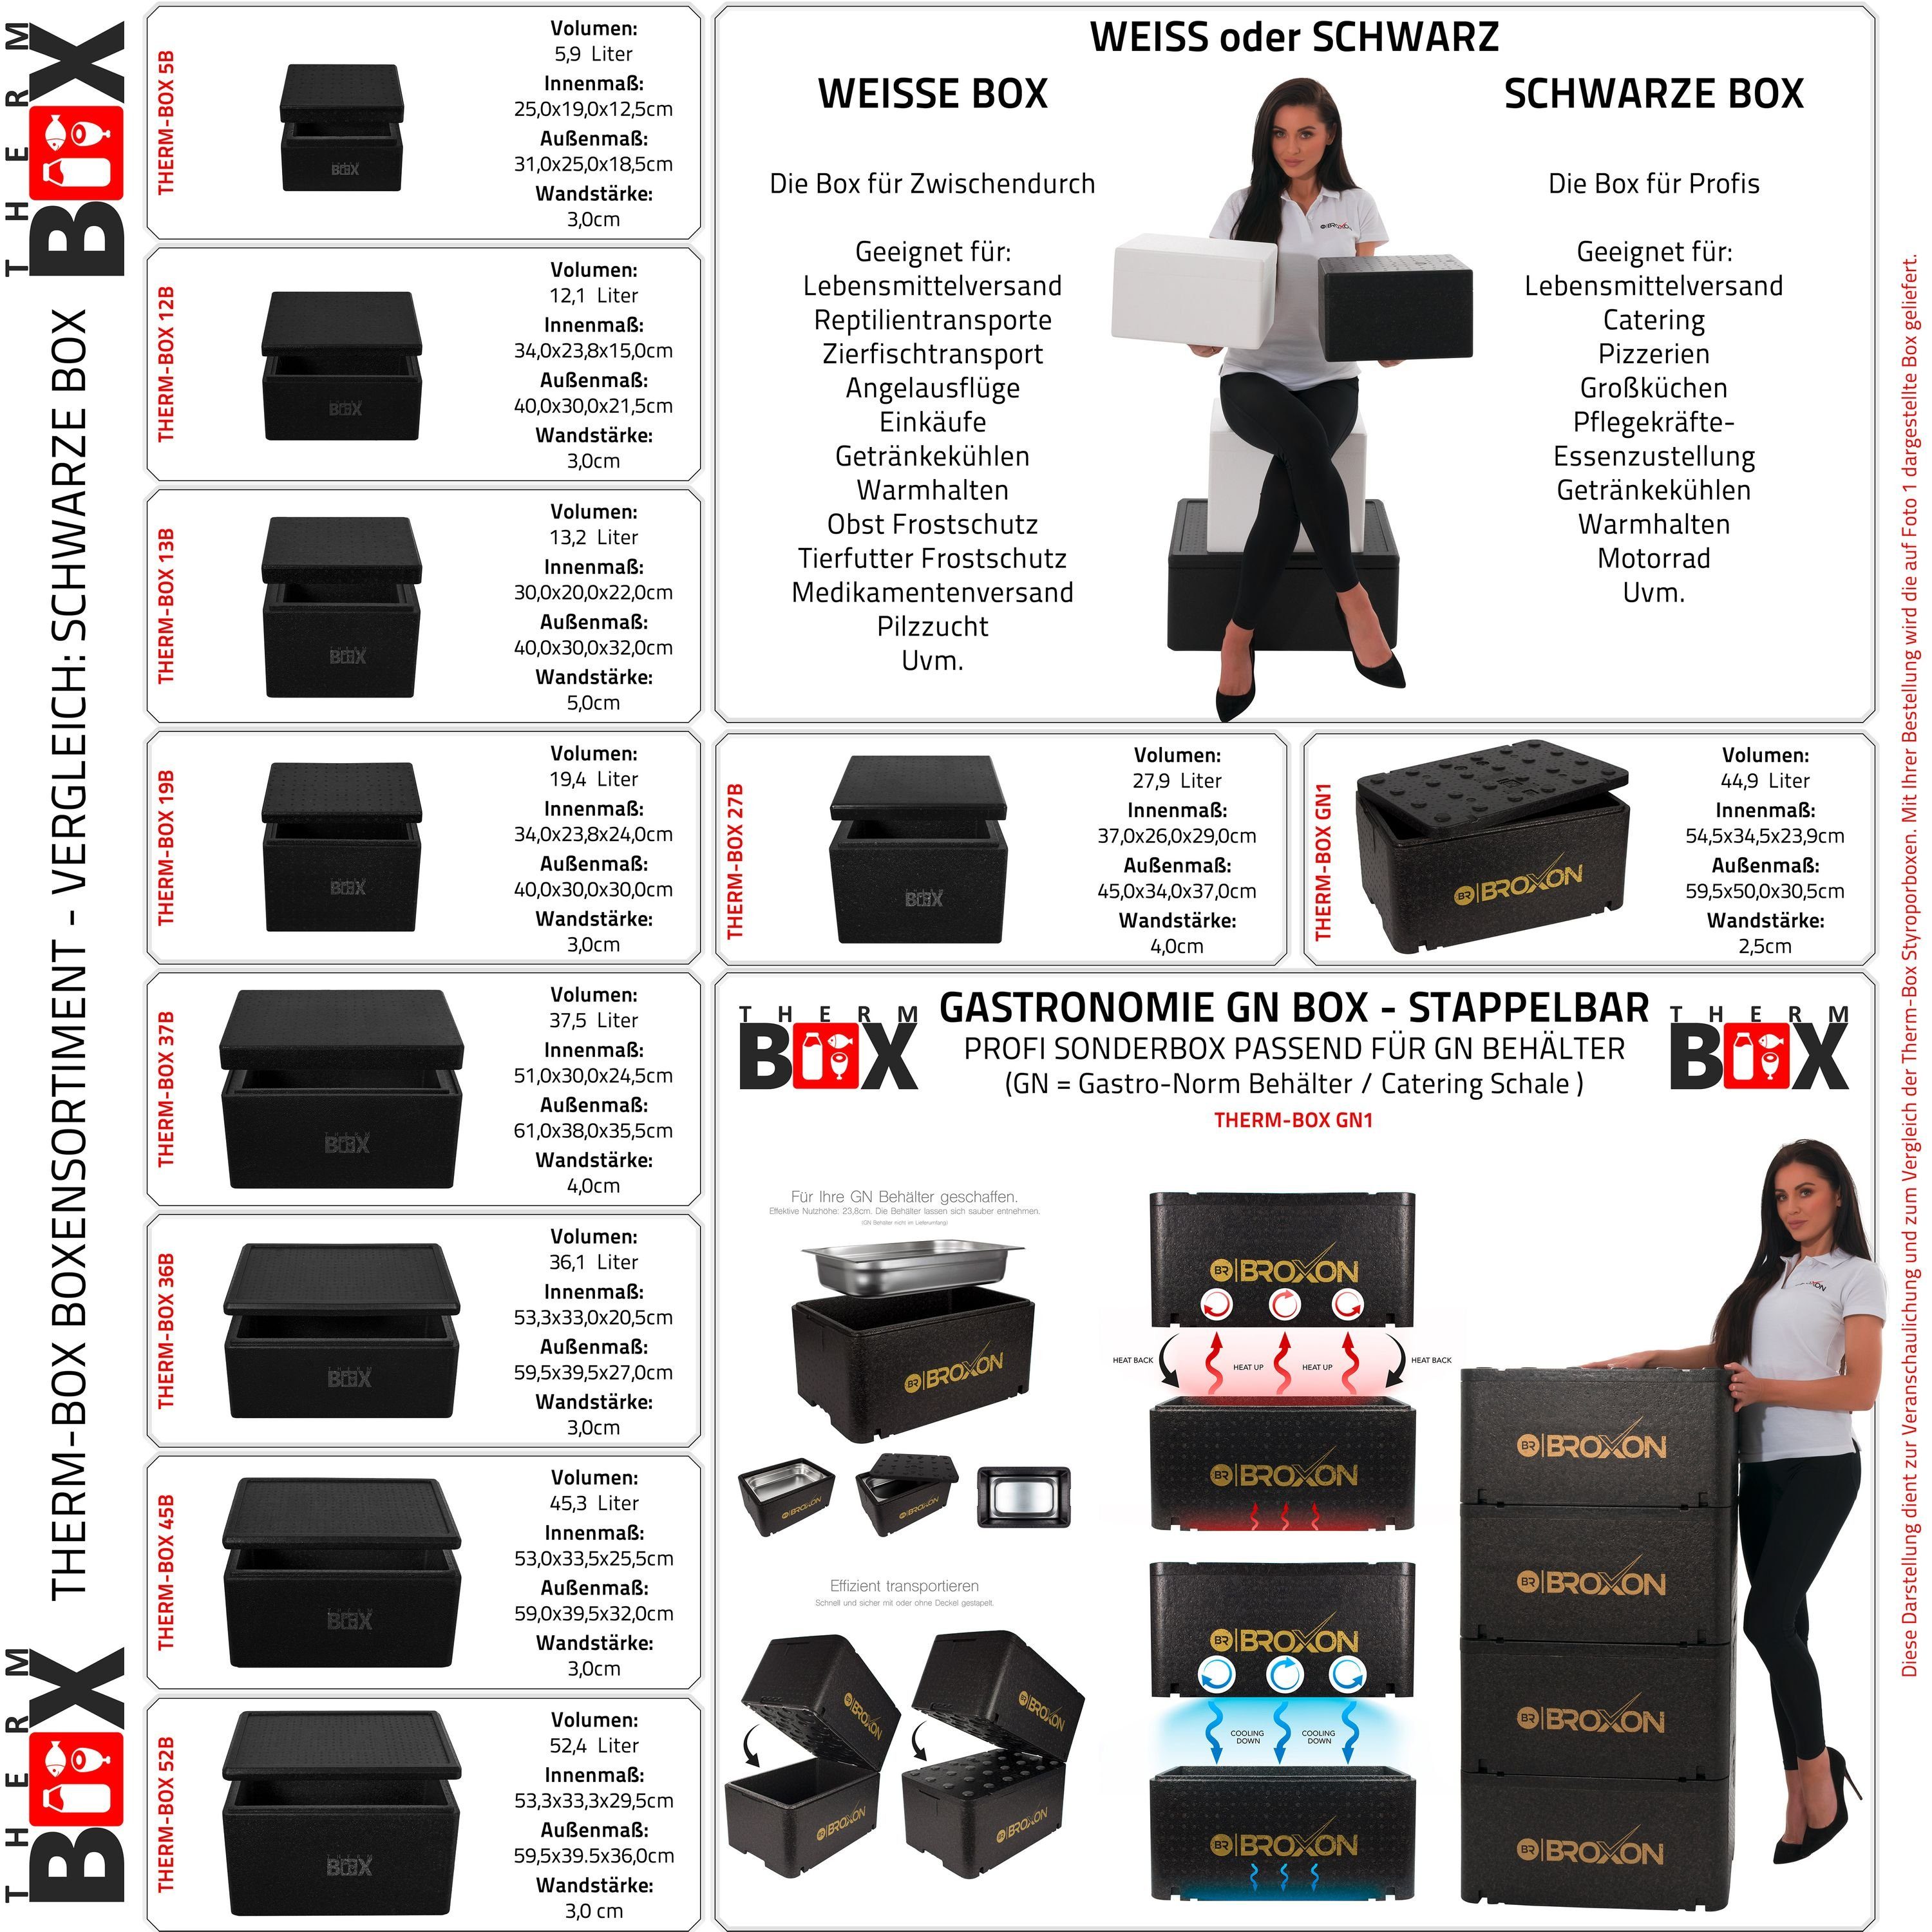 Wiederverwendbar Karton), Innenmaß:51x30x24cm mit Styroporbox Thermobehälter Box Isolierbox Warmhaltebox Kühlbox (0-tlg., 4,0cm Deckel Thermobox Styropor-Piocelan, Wand: 37,5L im Profibox Volumen: THERM-BOX 37B,